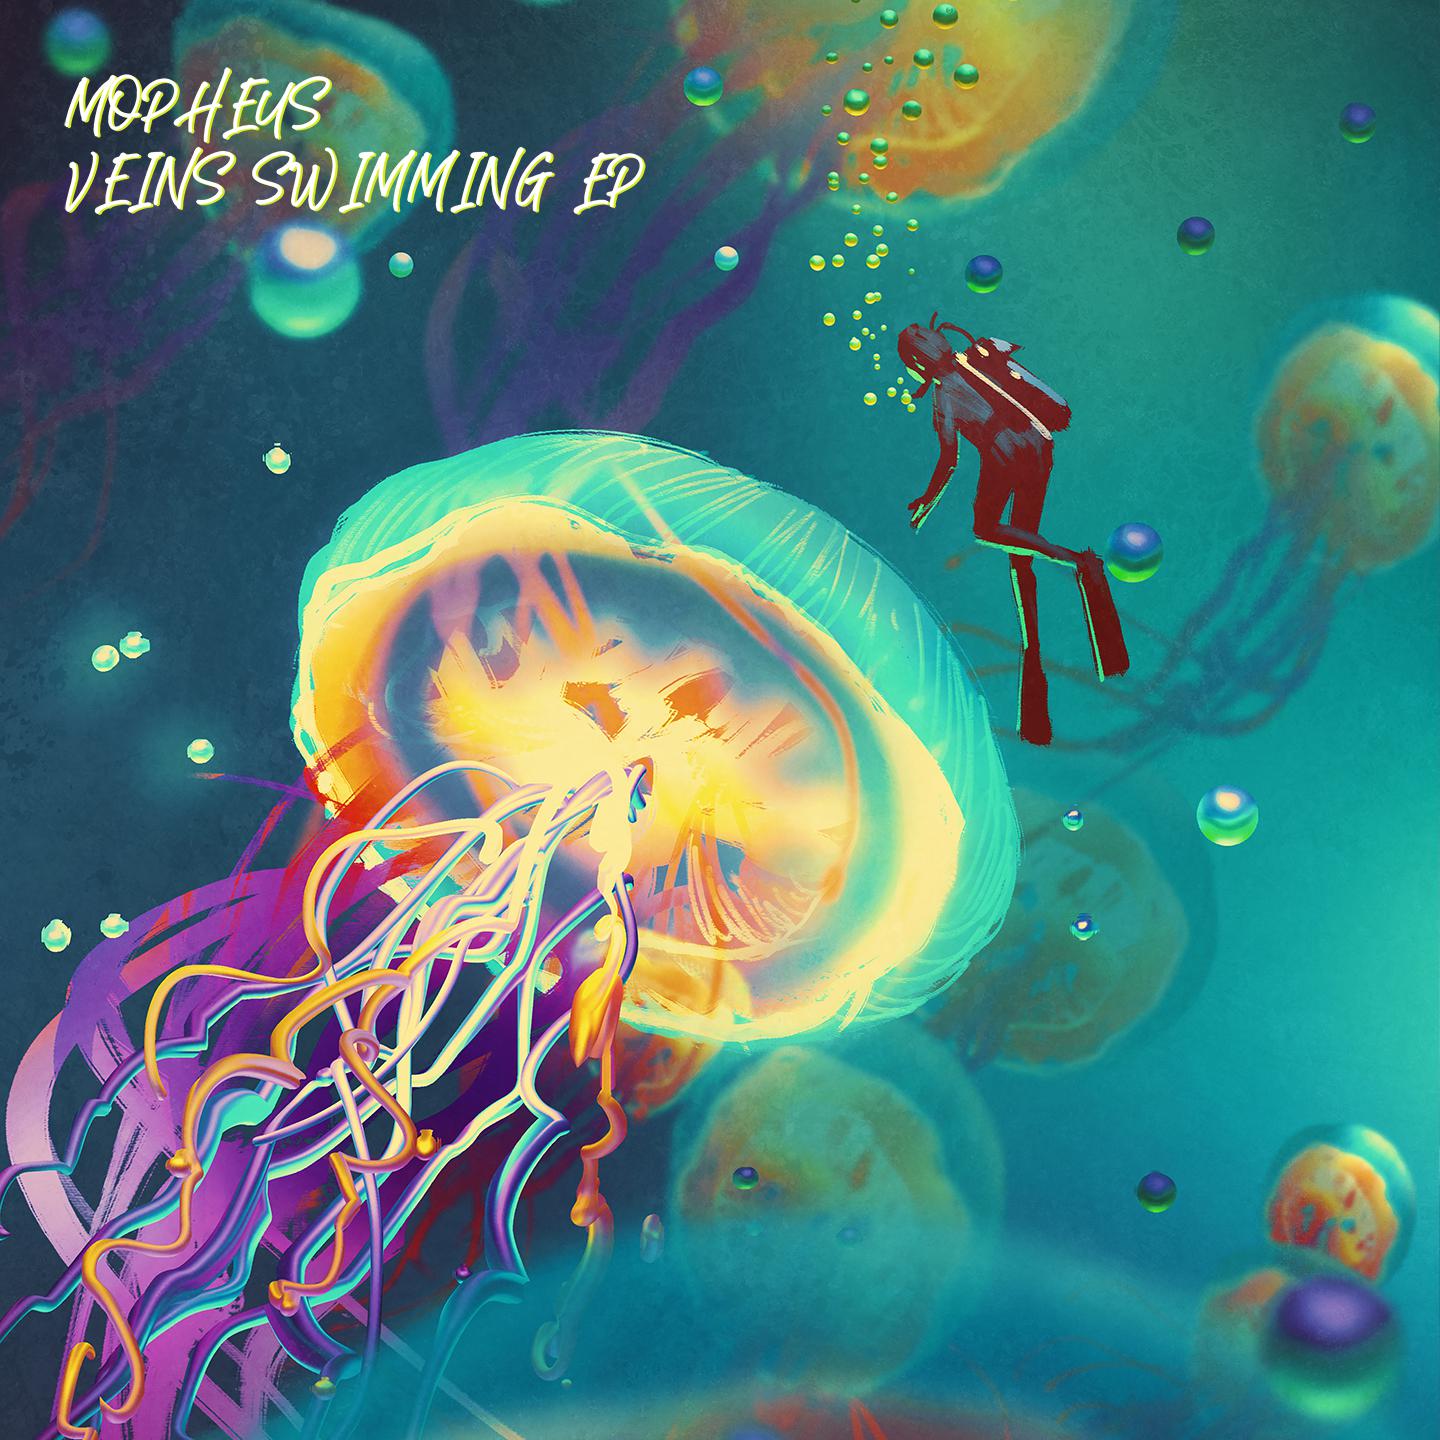 MoPheus - Veins Swimming